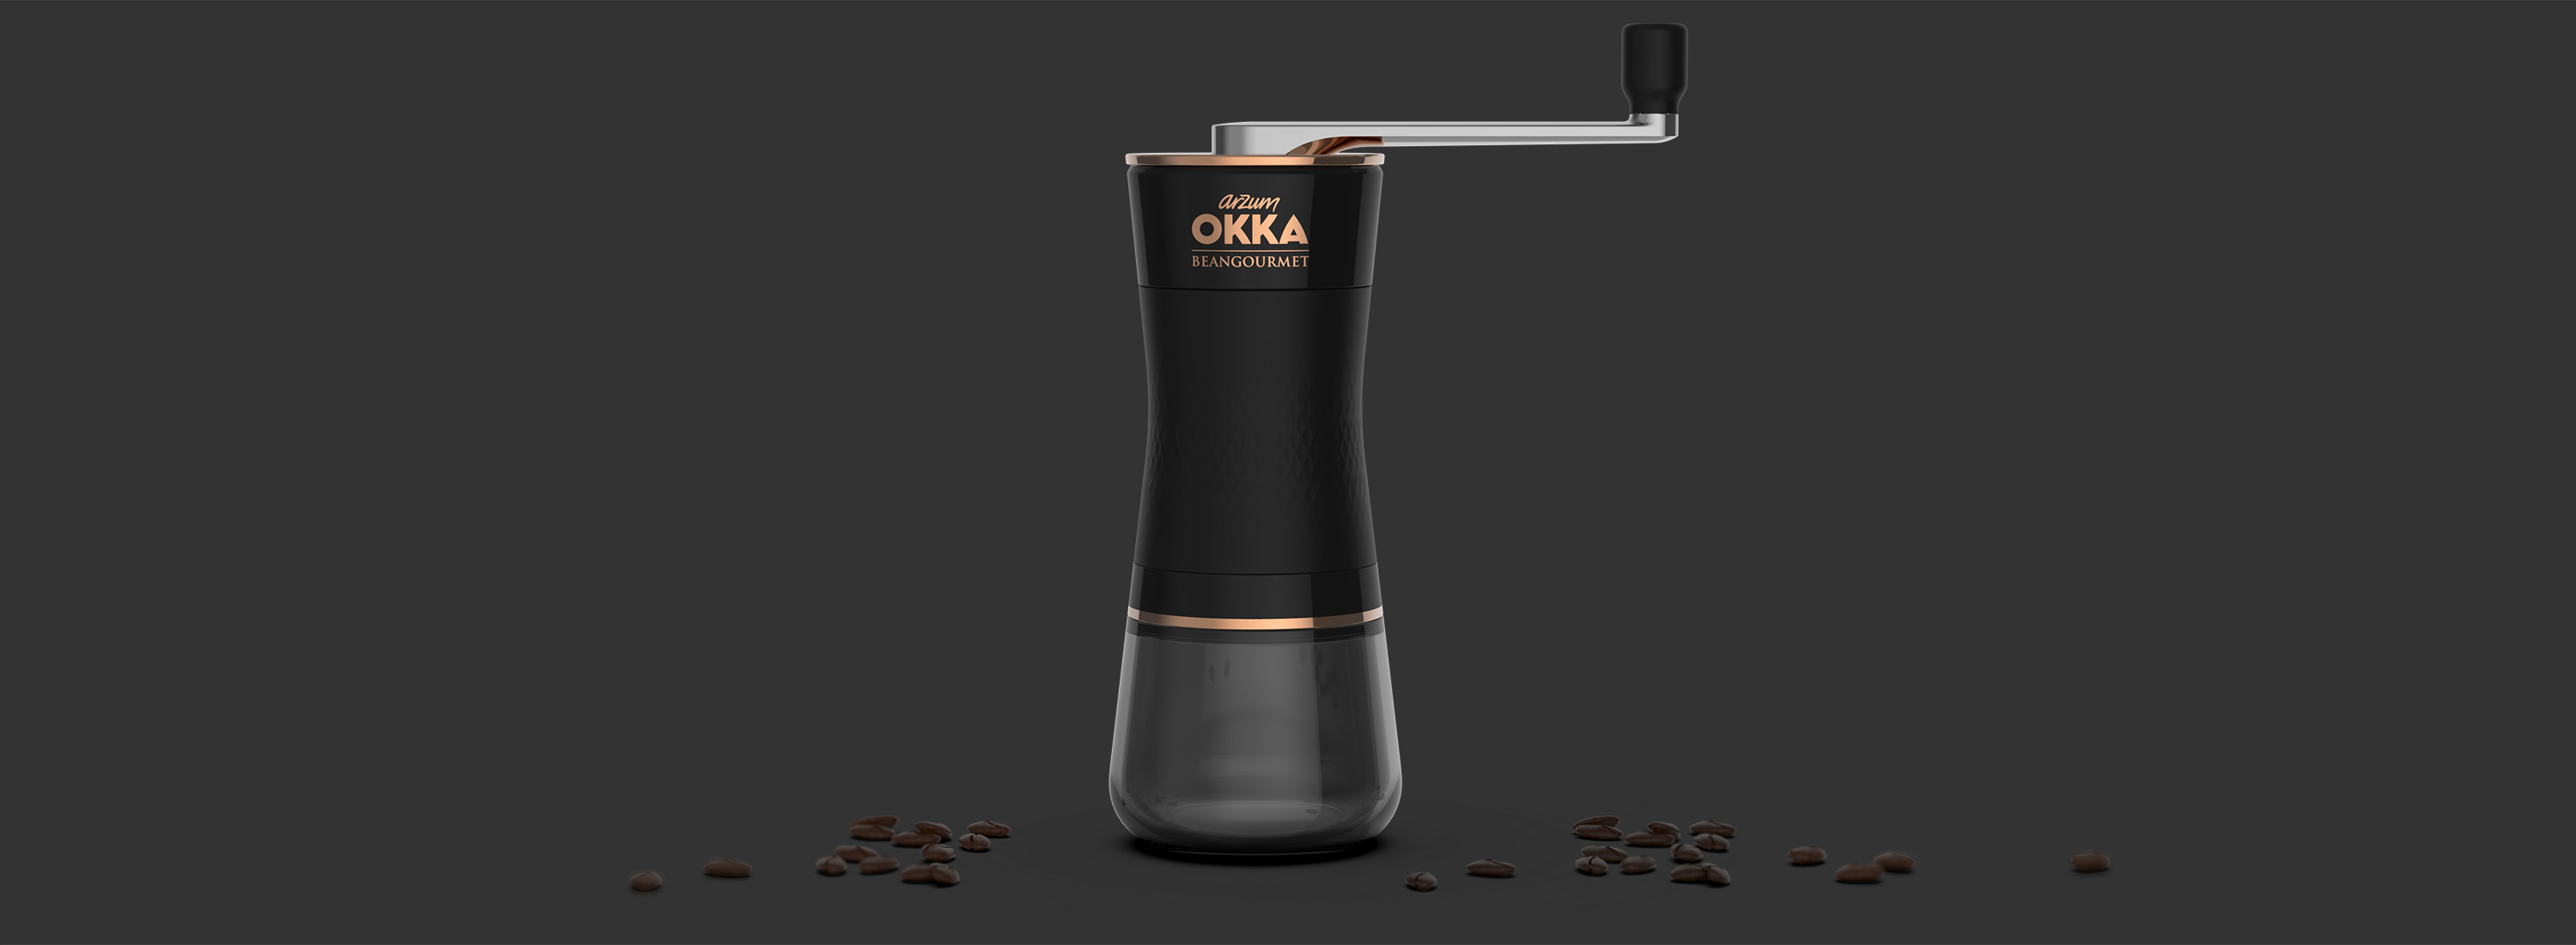 Arzum Okka Beangourmet Coffee Grinder Design Rendering